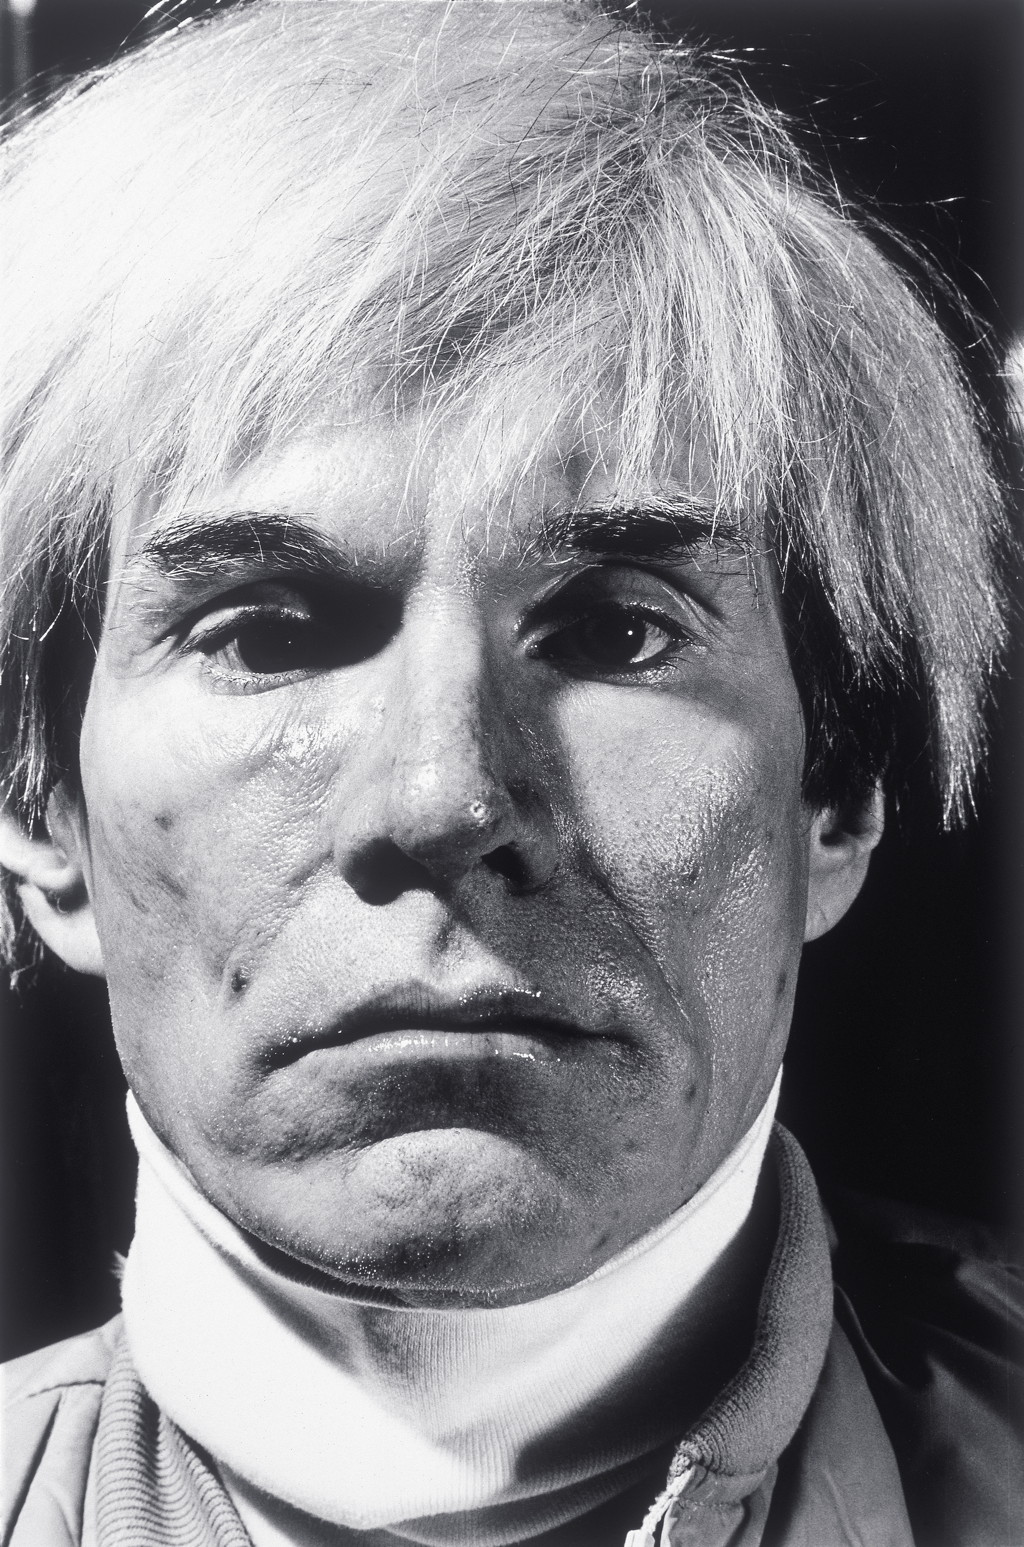 Werk - Andy Warhol, New York 1983 - MNK_00124_00254_helnwein_warhol.jpg